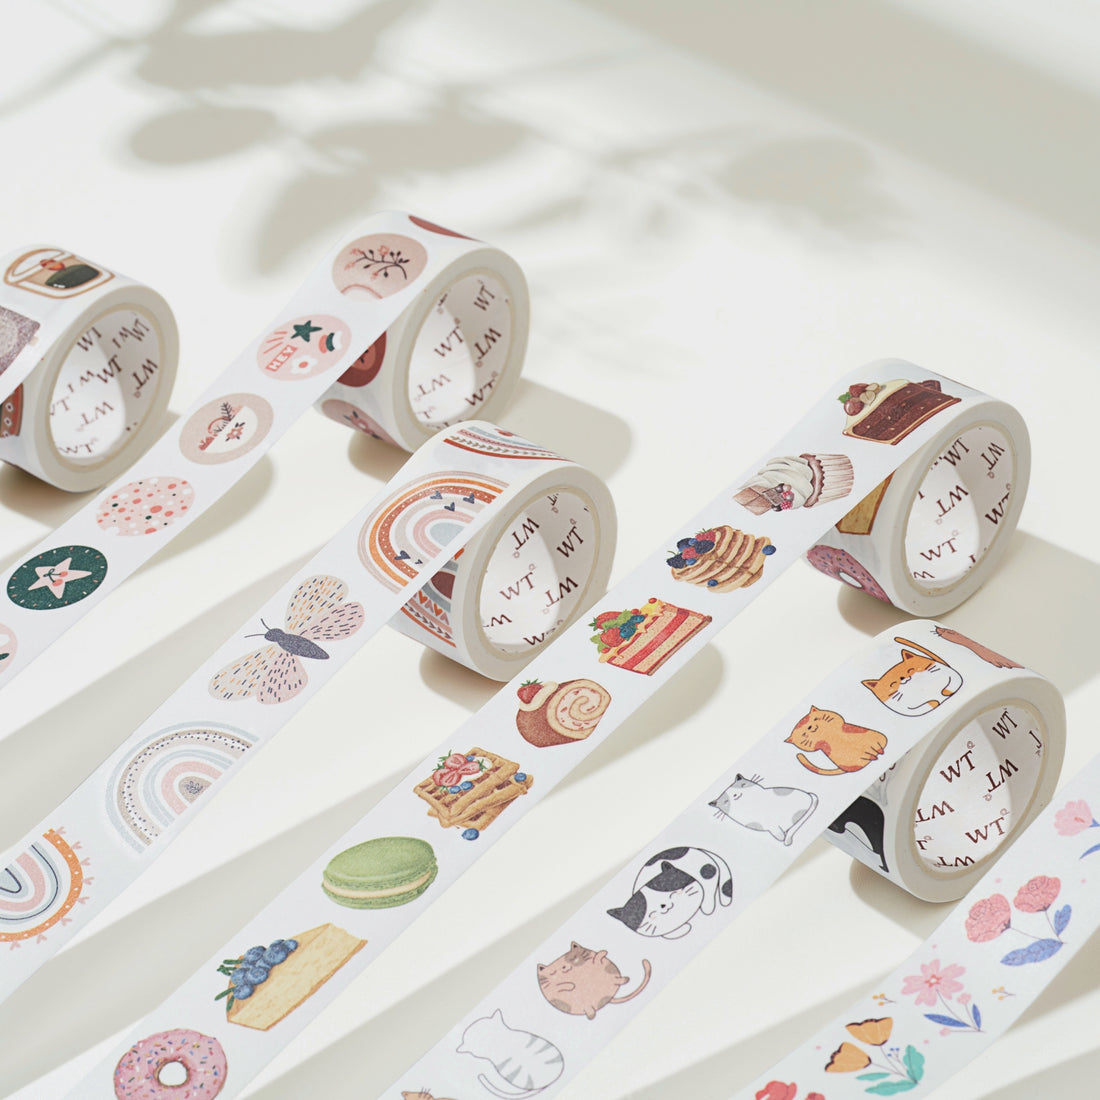 Hygge Washi Tape Sticker Set